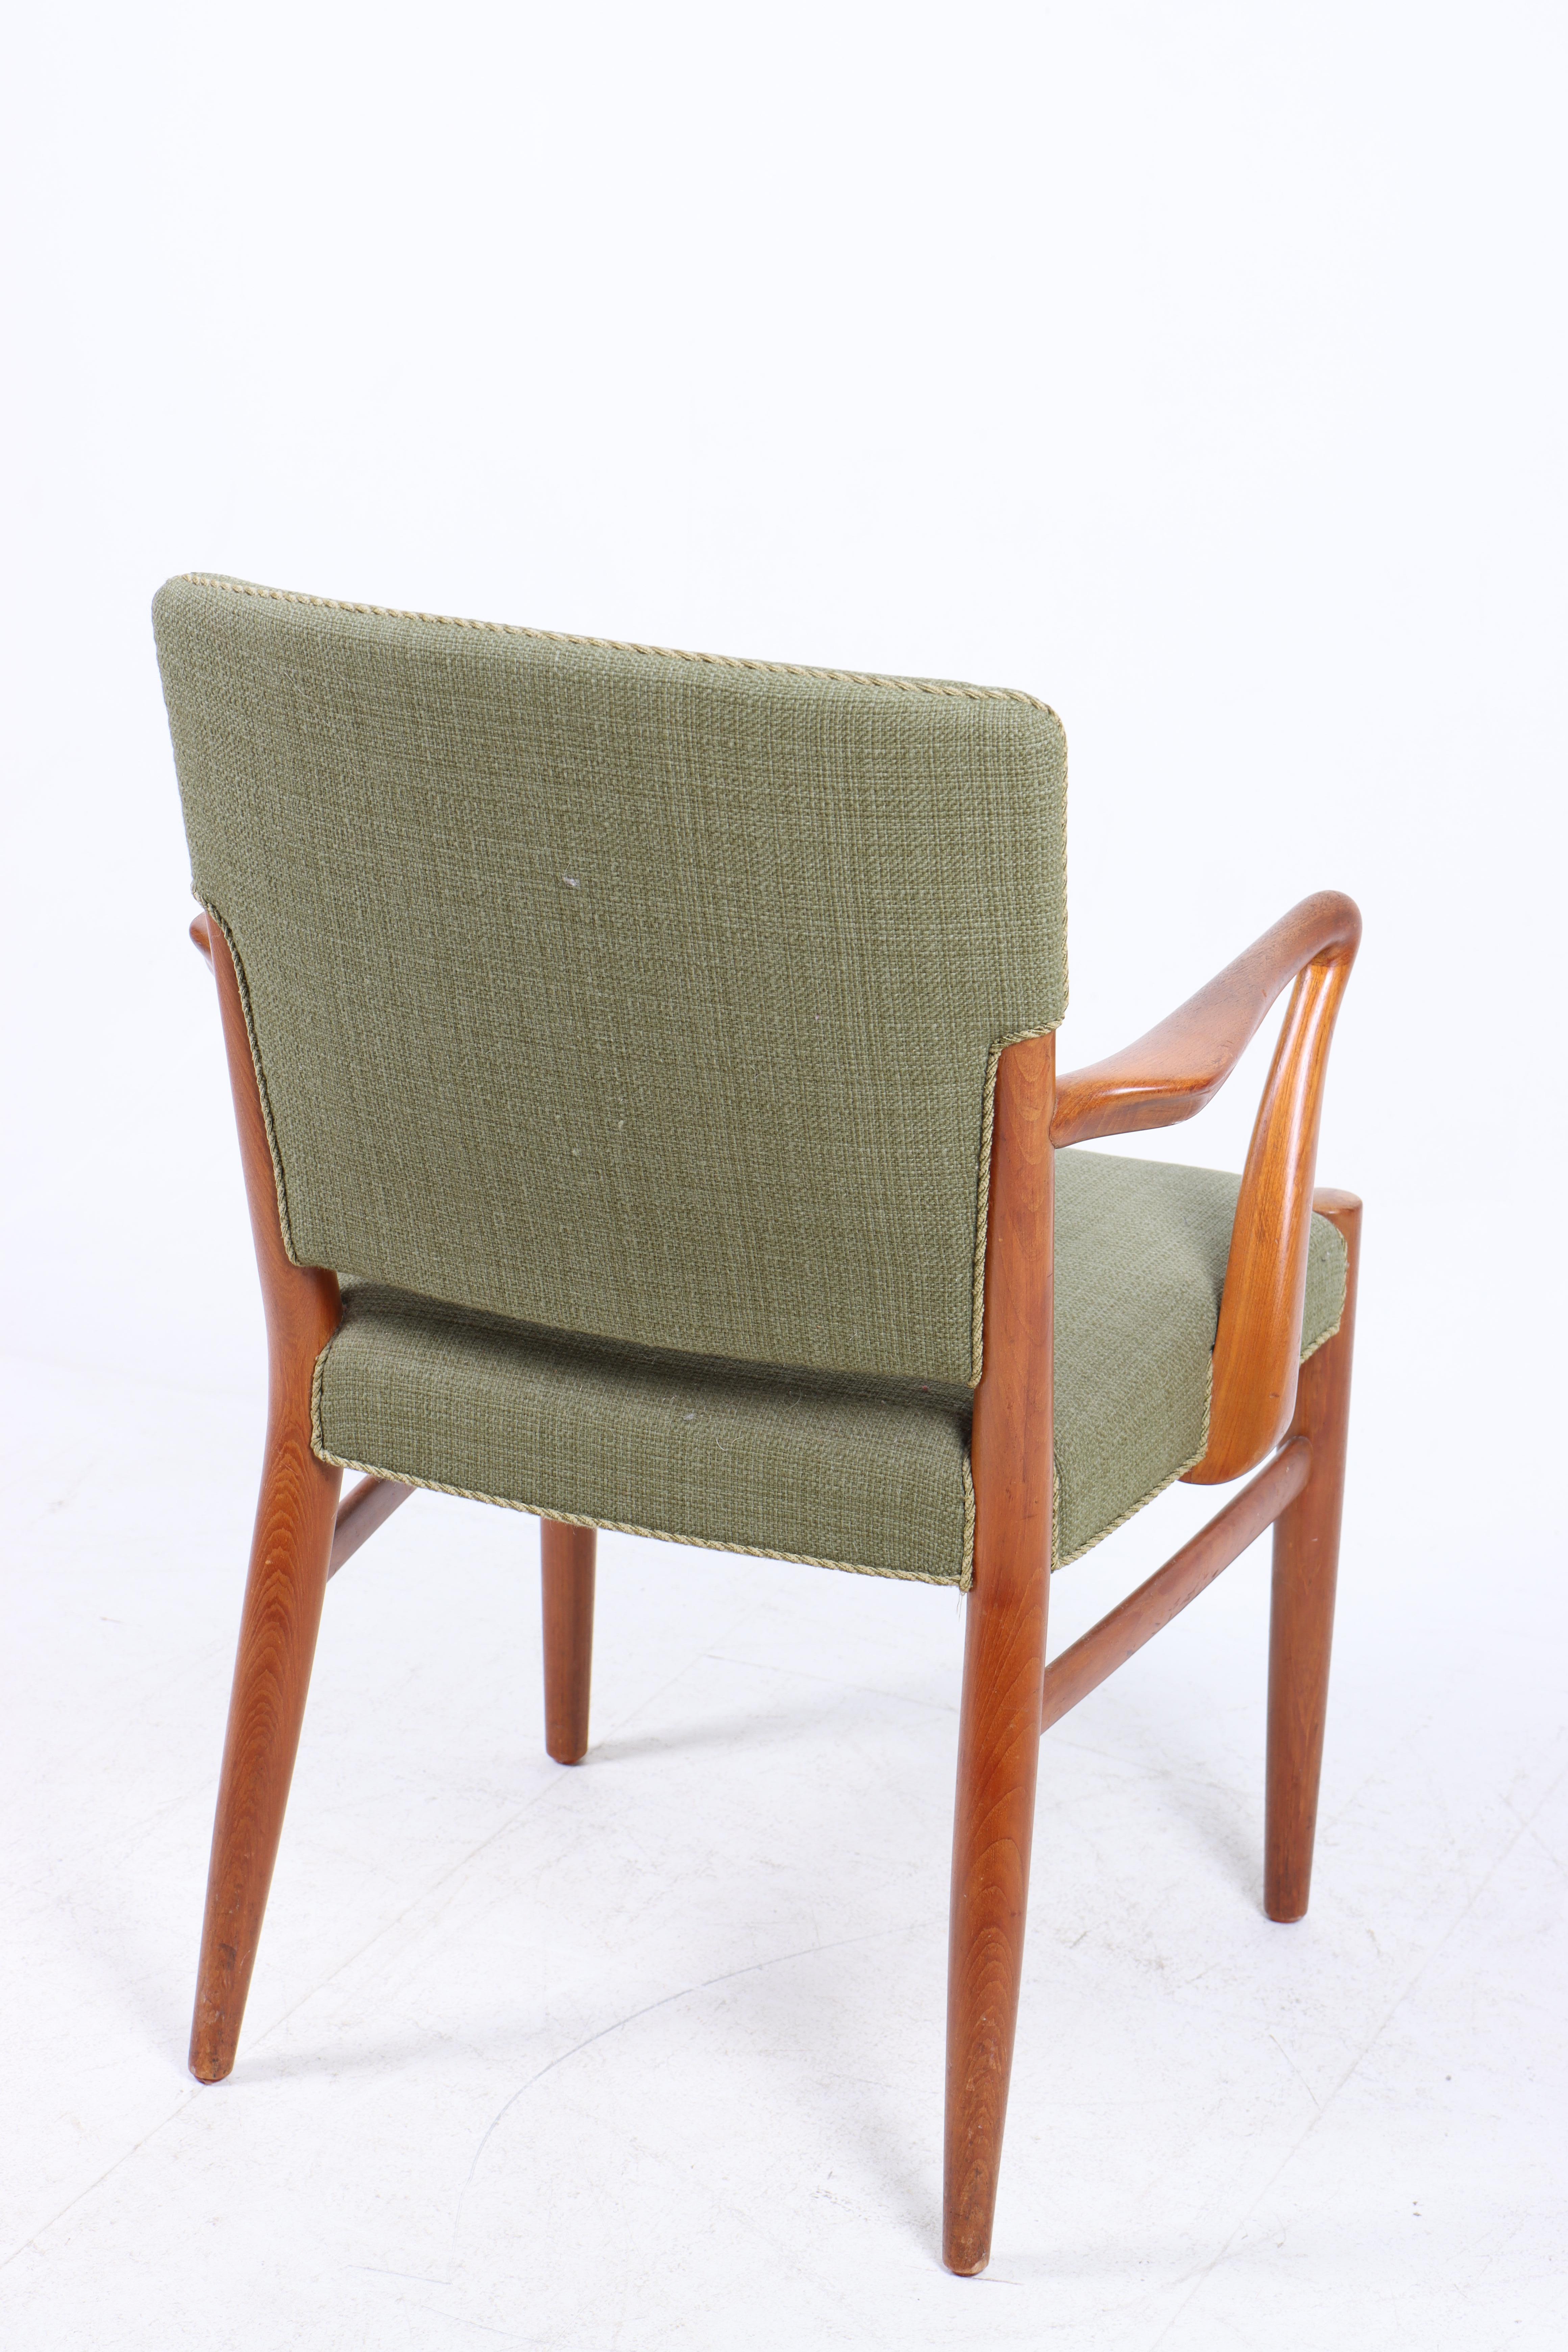 Mid-20th Century Midcentury Armchair in Teak by Hvidt & Mølgaard, 1960s For Sale